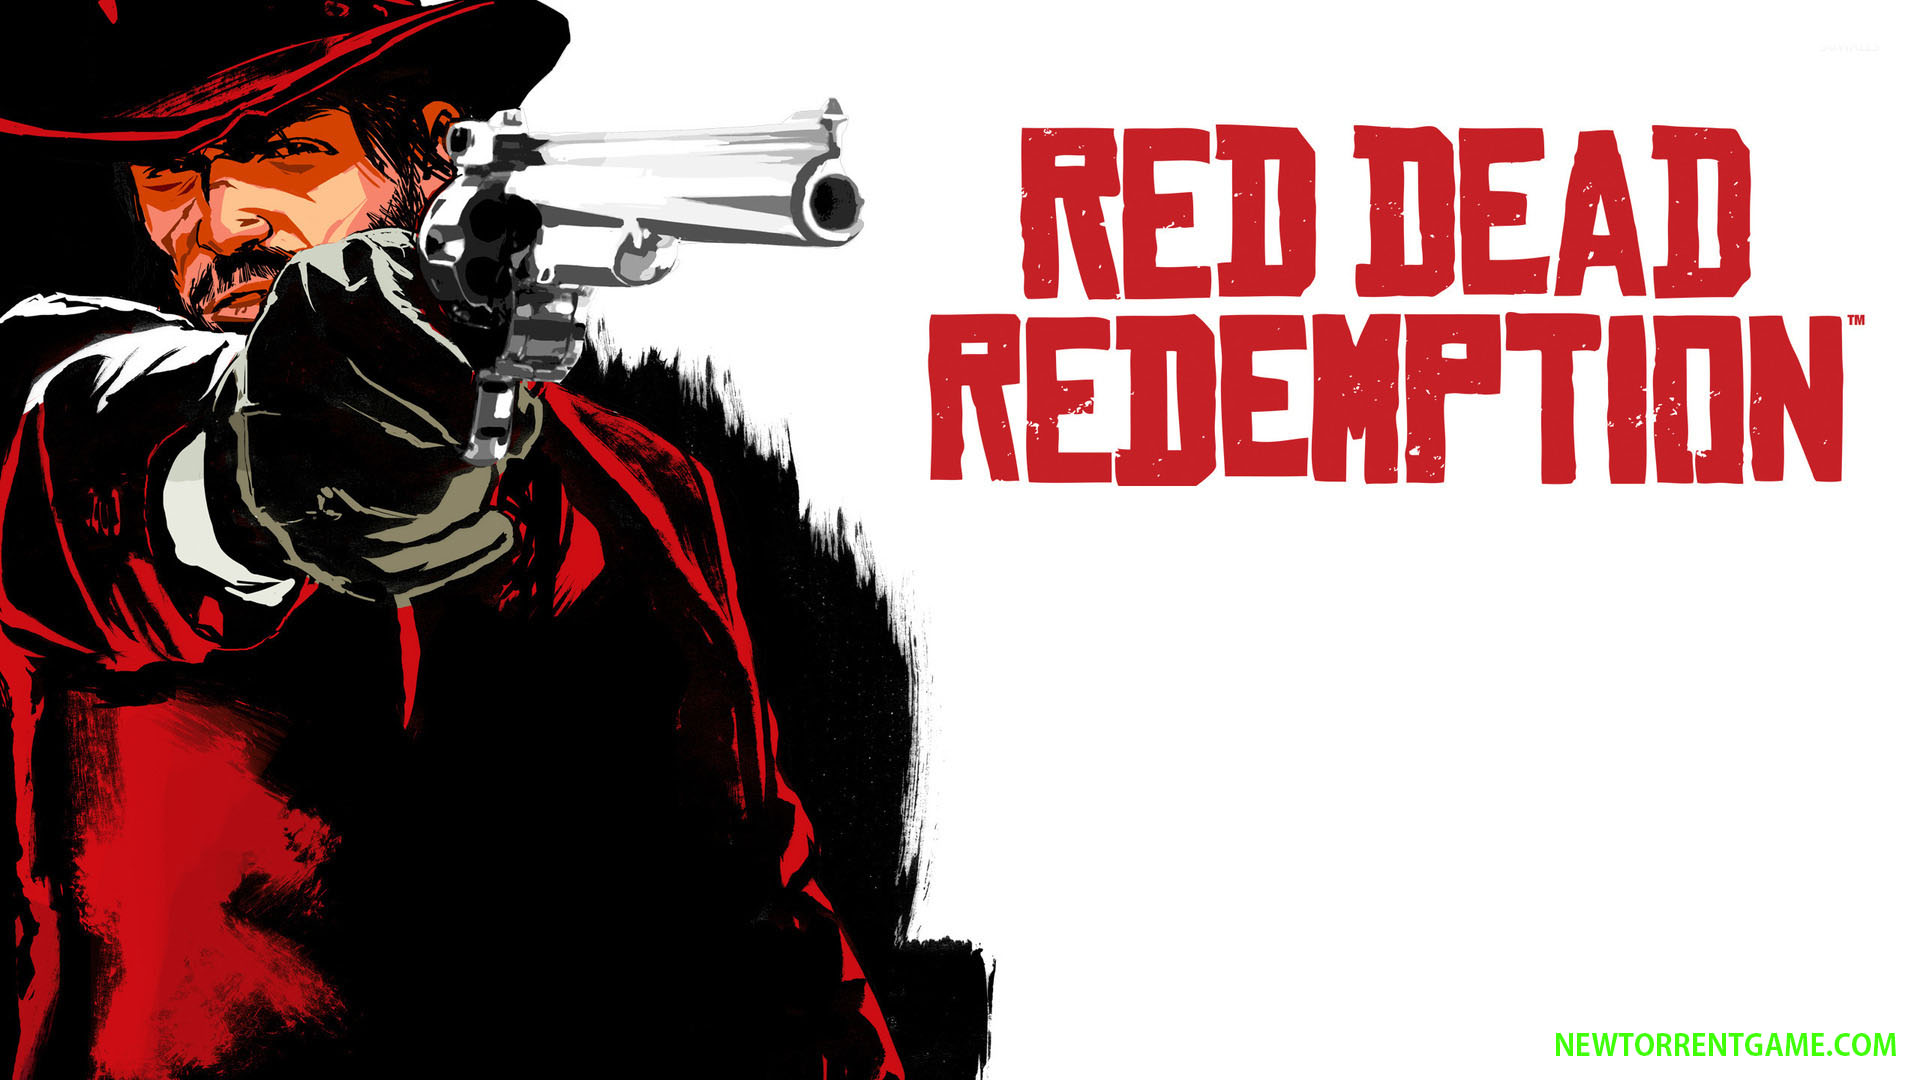 Red dead redemption 2 plot